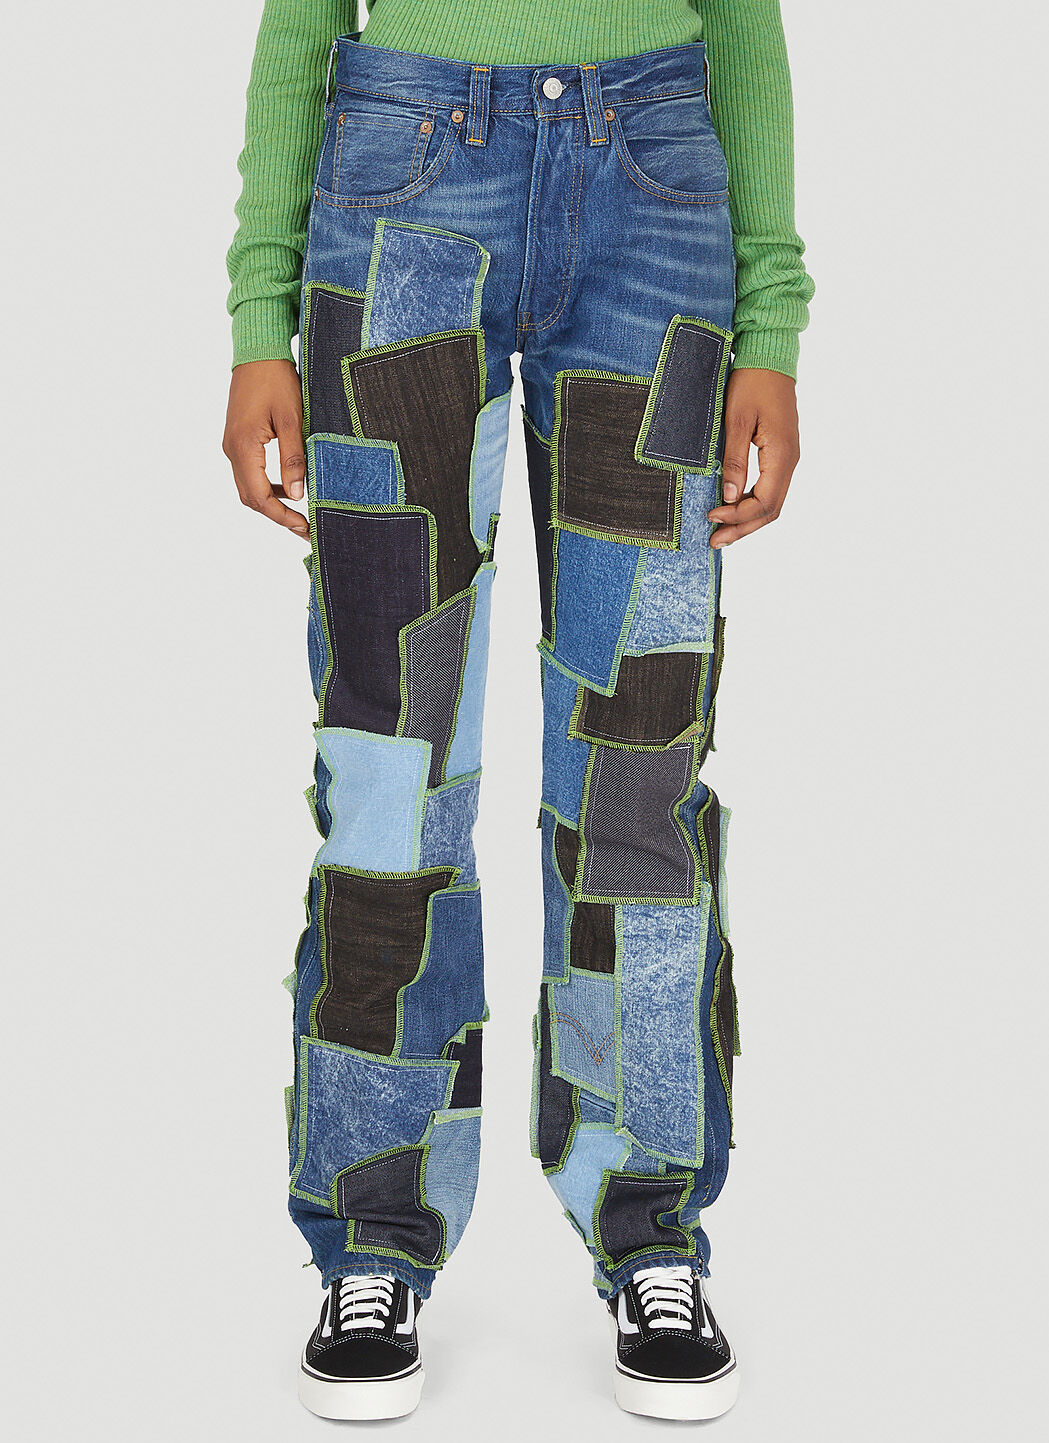 DRx x STEFAN MEIER x LN-CC Drop 6 Patchwork Jeans Green drs0350009